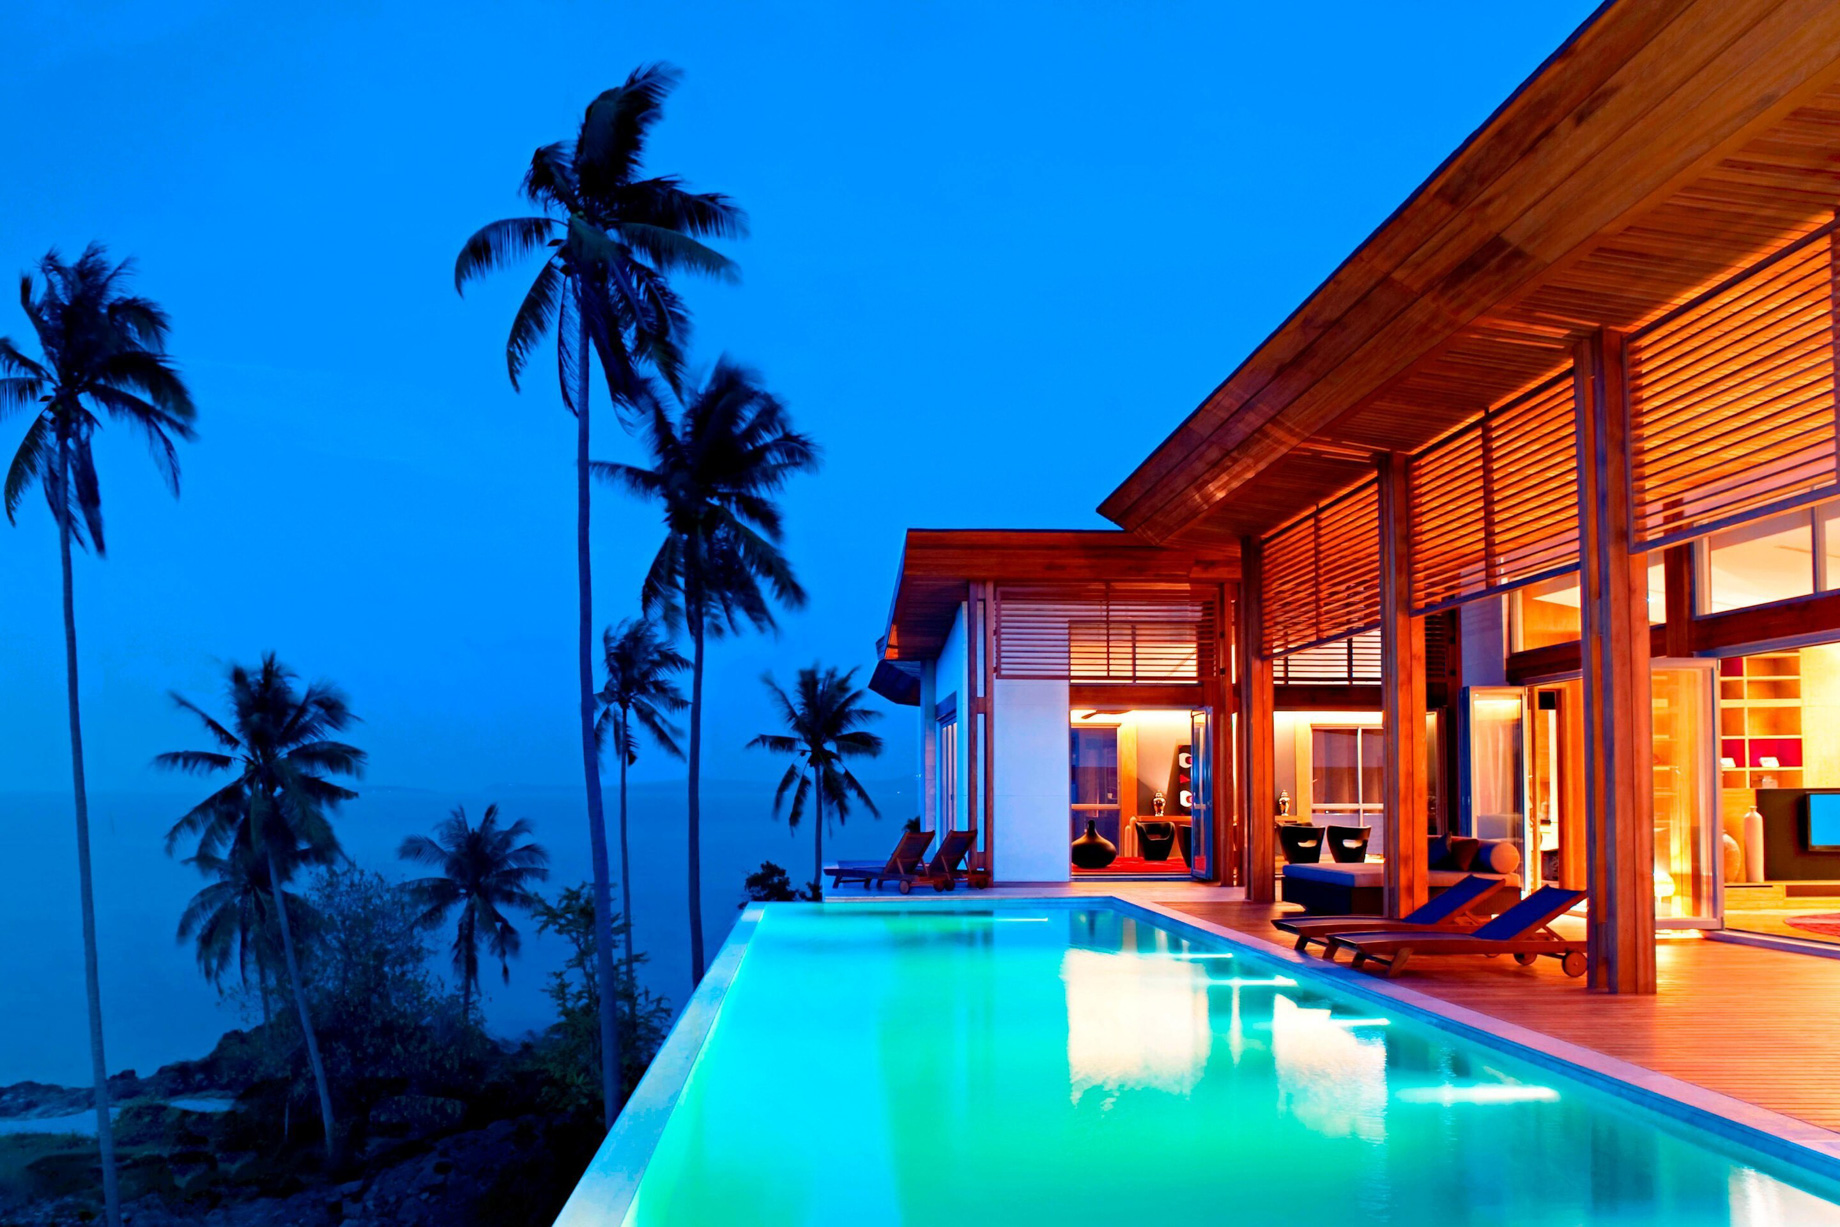 W Koh Samui Resort – Thailand – Residence Villa Exterior Pool Deck at Night